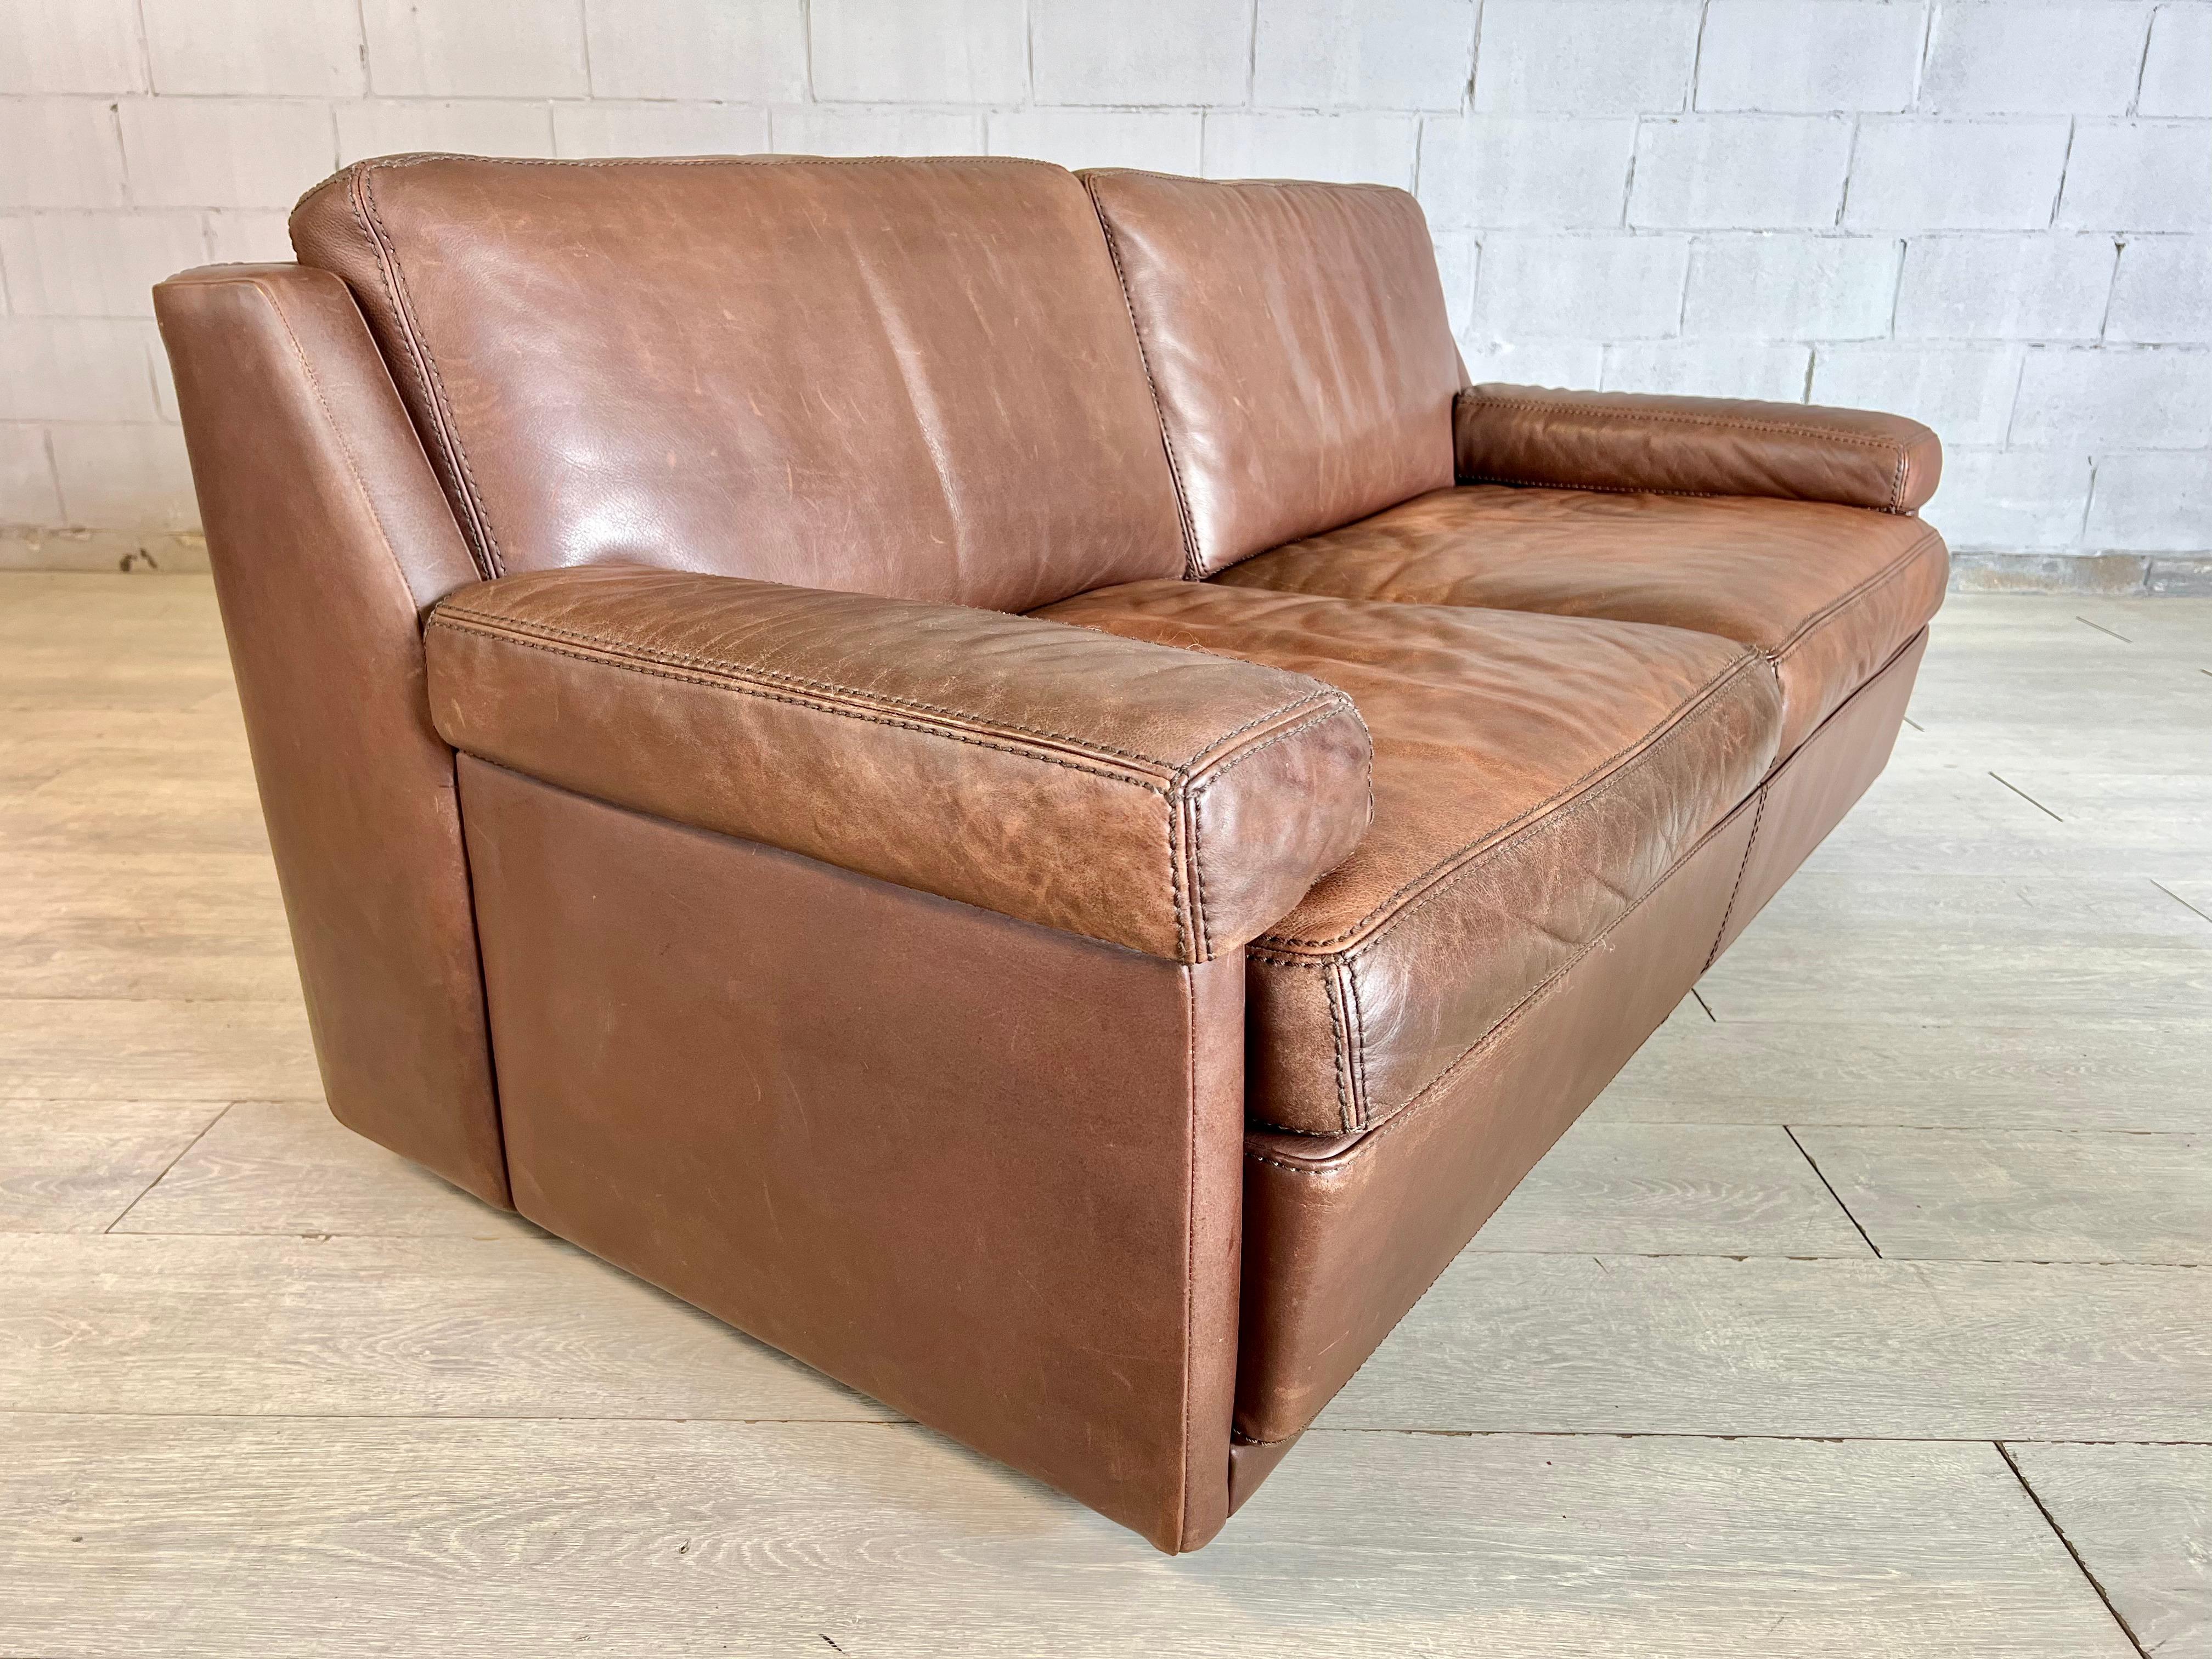 Original Vintage Modern Cognac Leather Sofa by Durlet, Belgium, 1970s For Sale 3